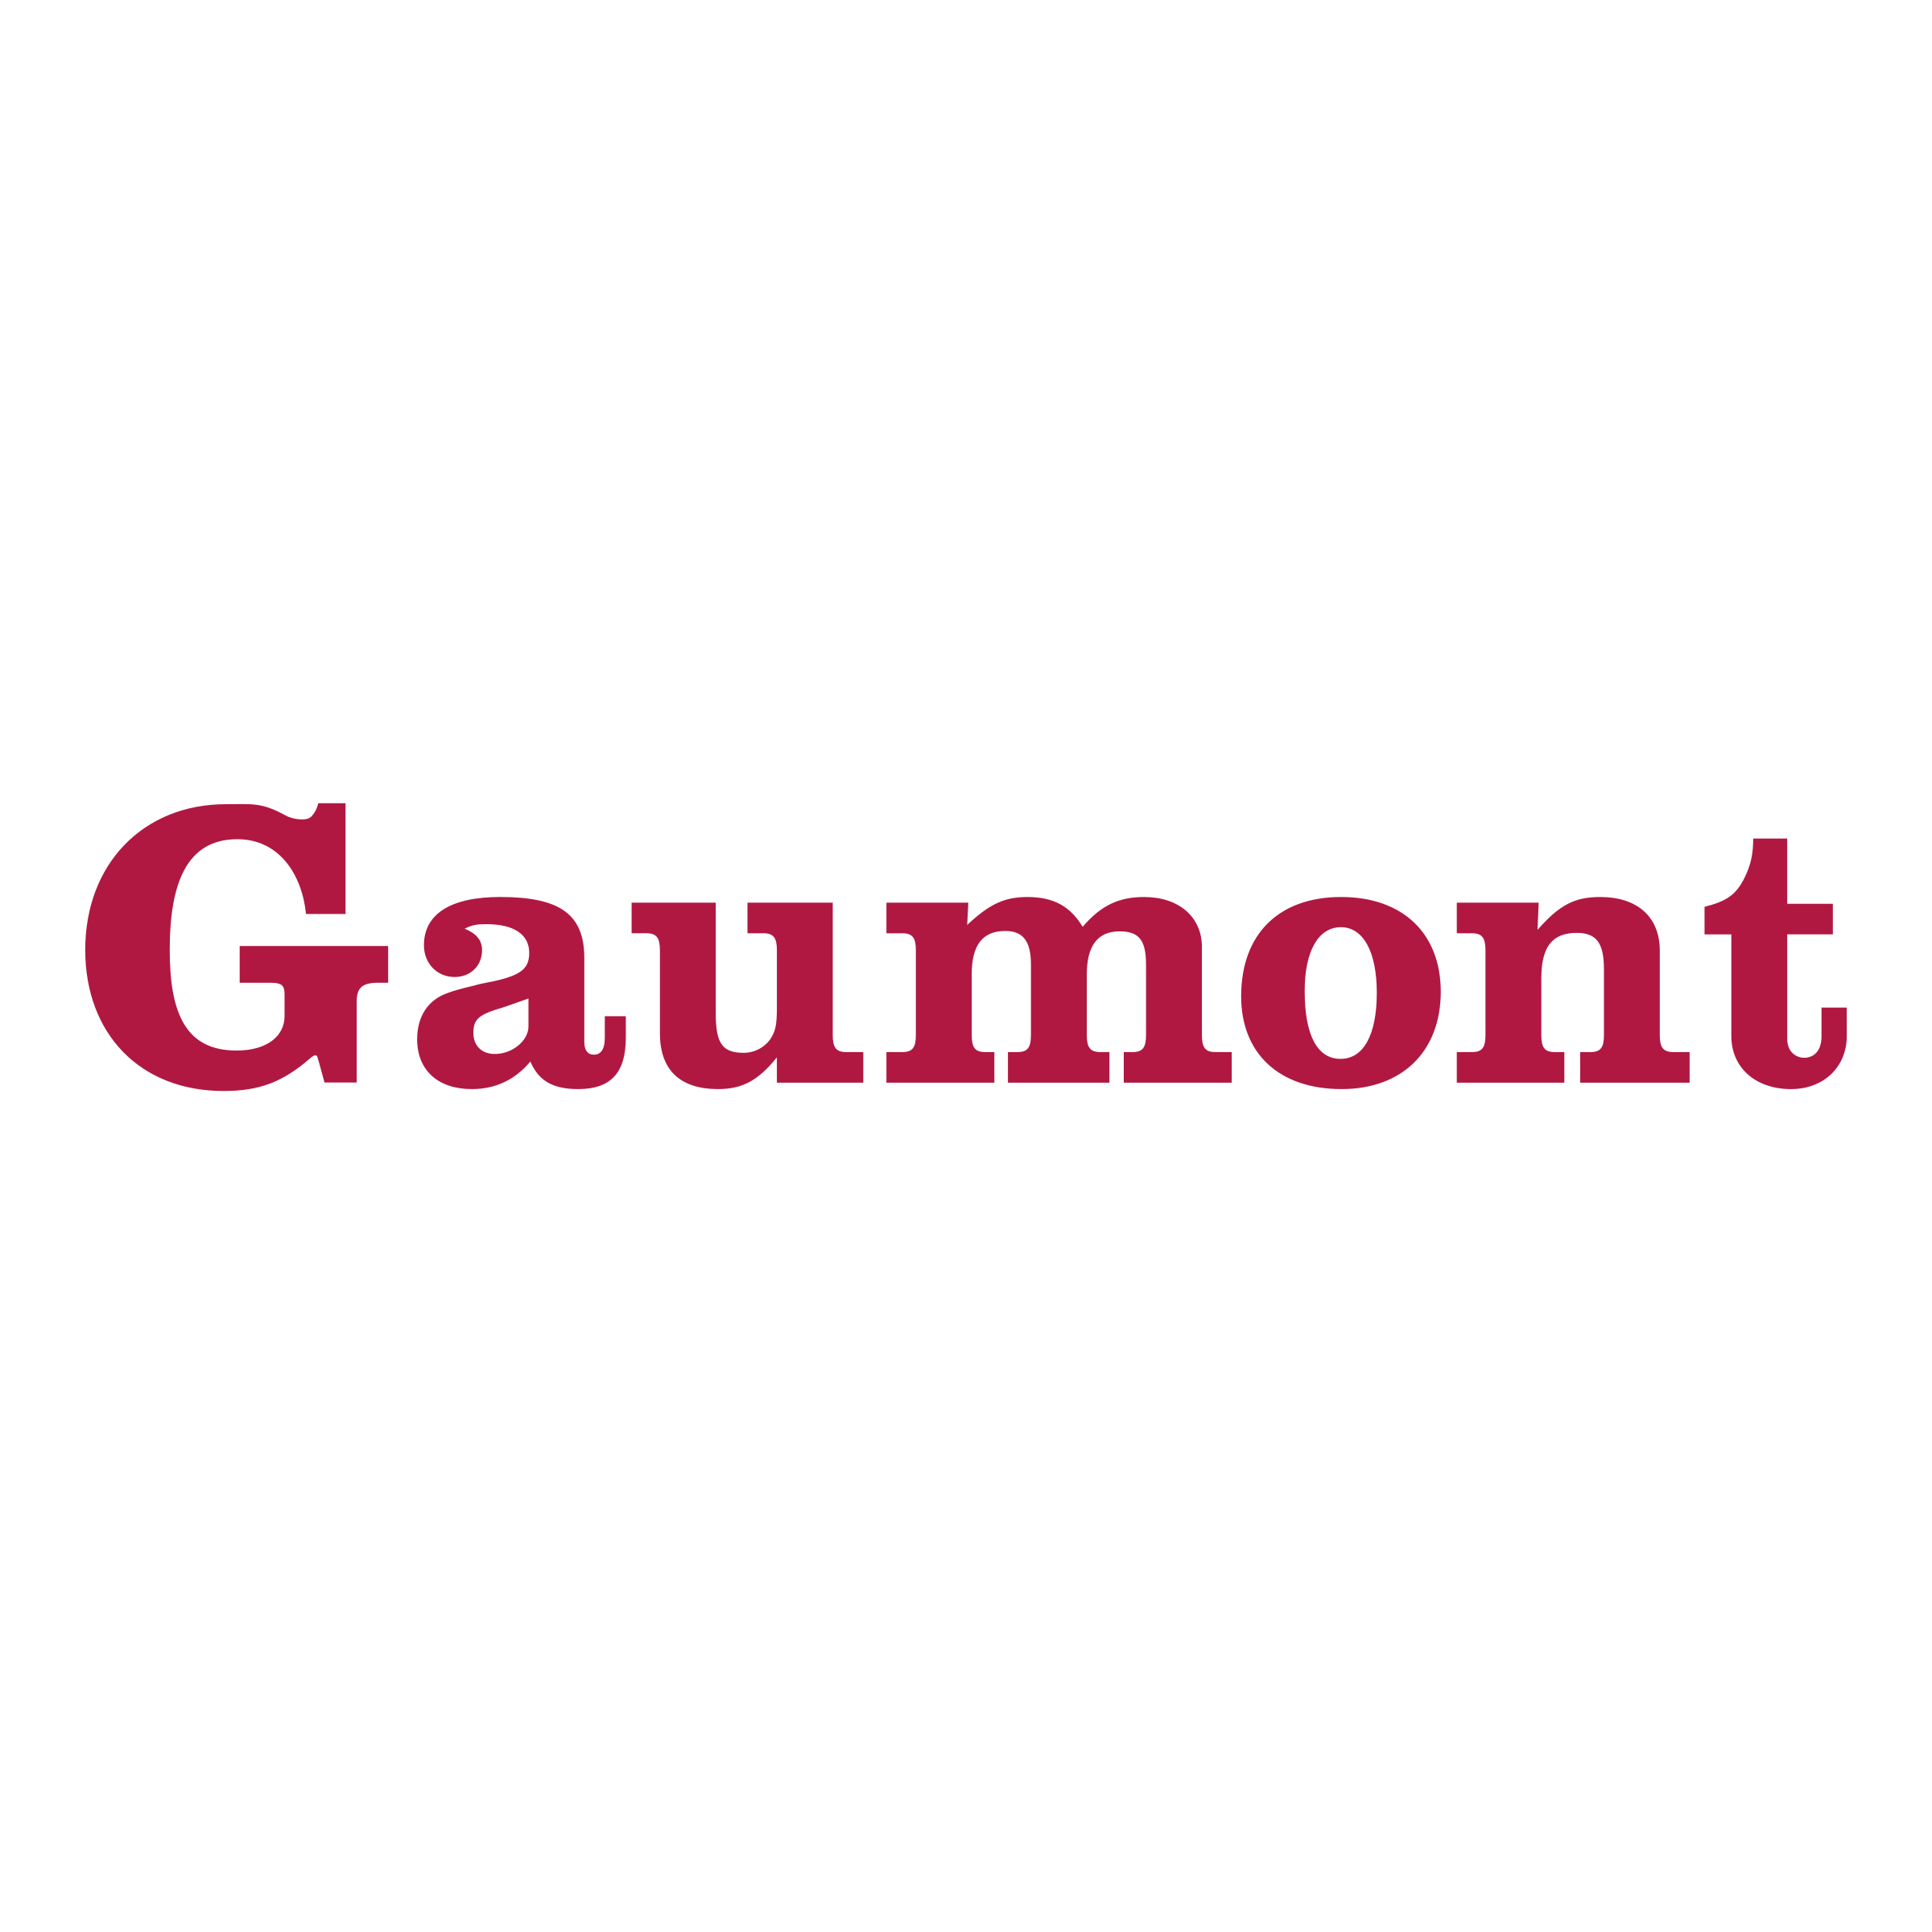 Gaumont Logo - Gaumont Logo PNG Transparent & SVG Vector - Freebie Supply